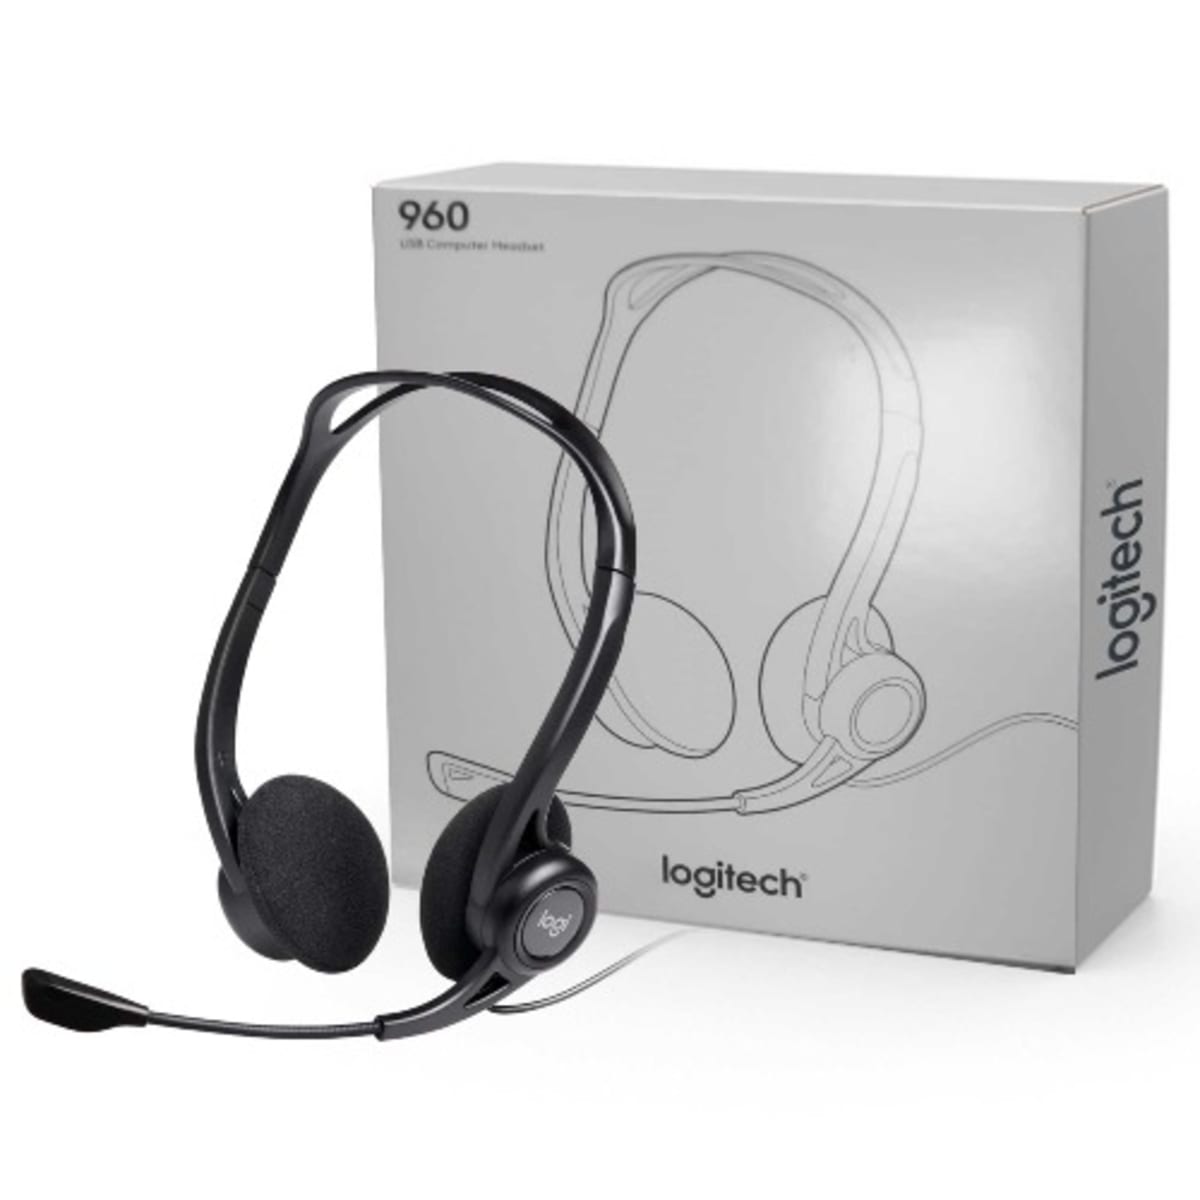 Logitech 960 USB Pc Headset | Konga Online Shopping